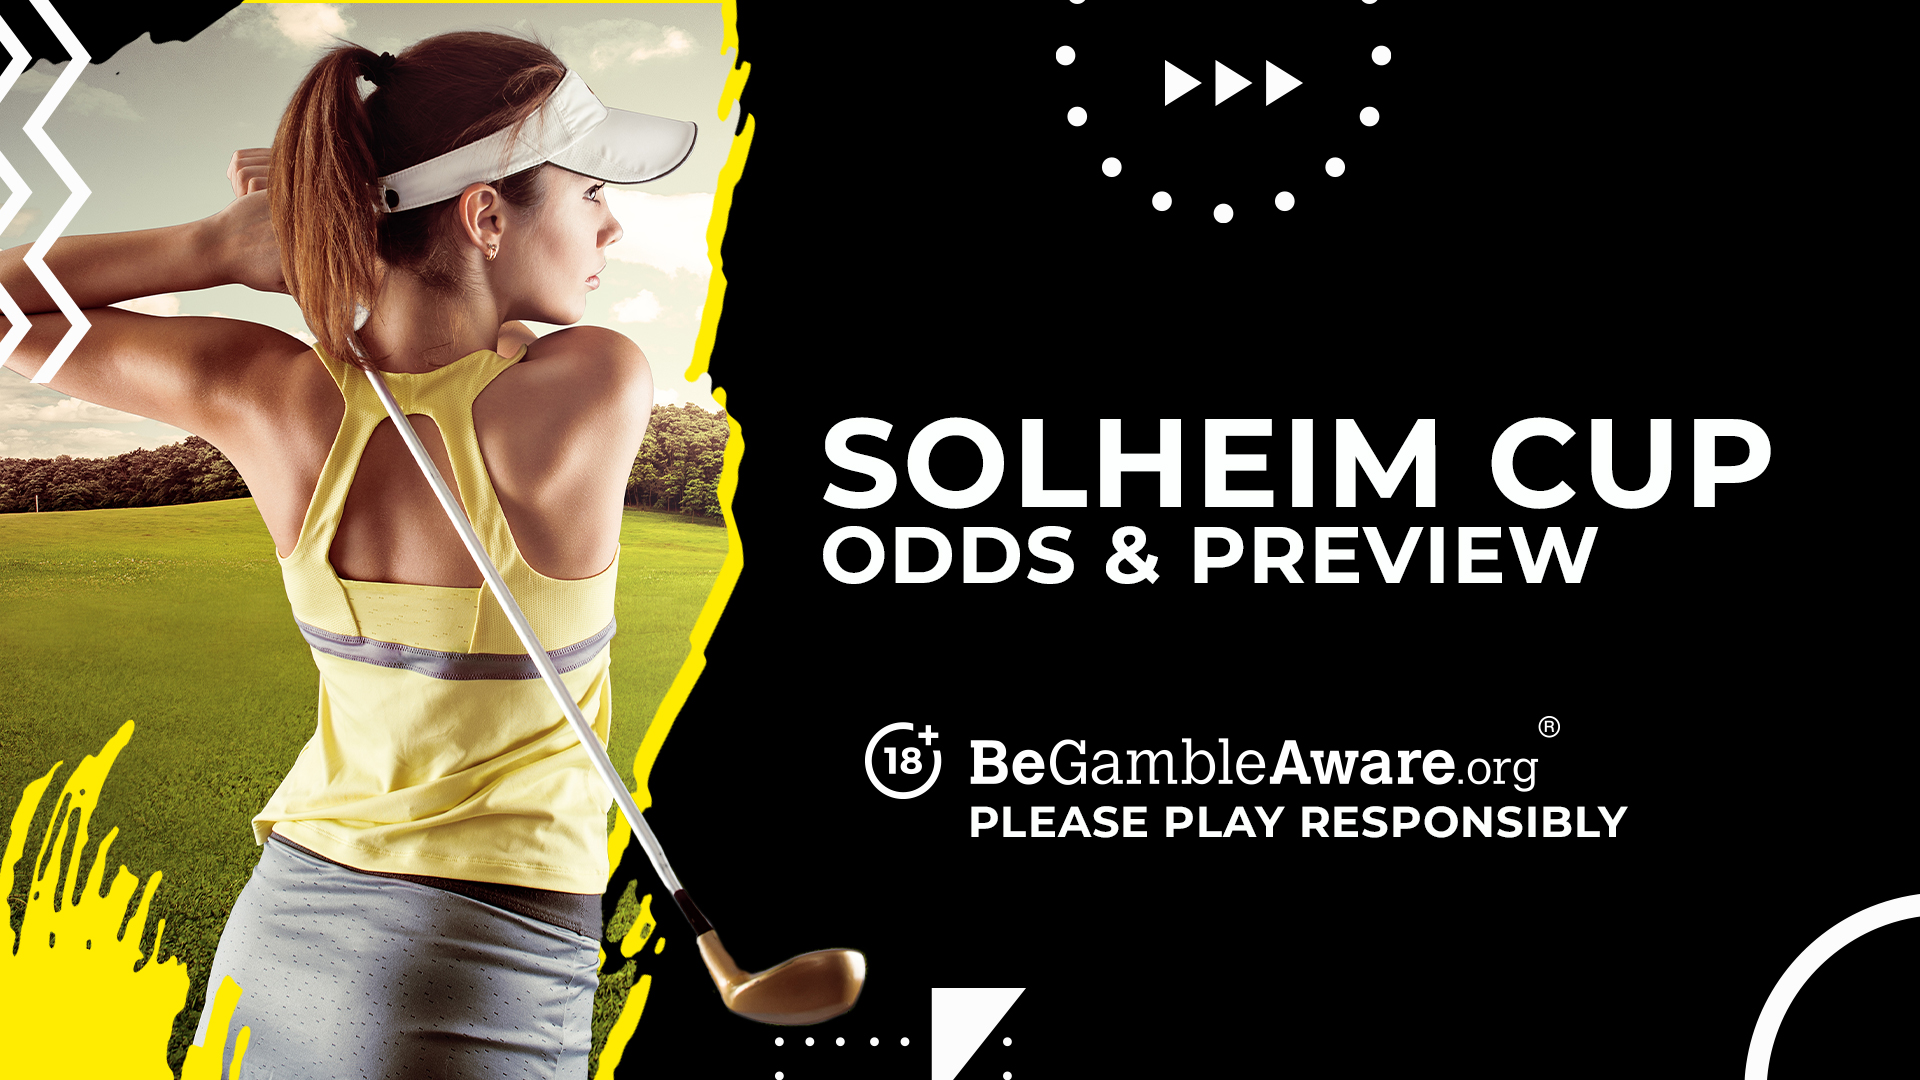 Photo: solheim cup golf betting